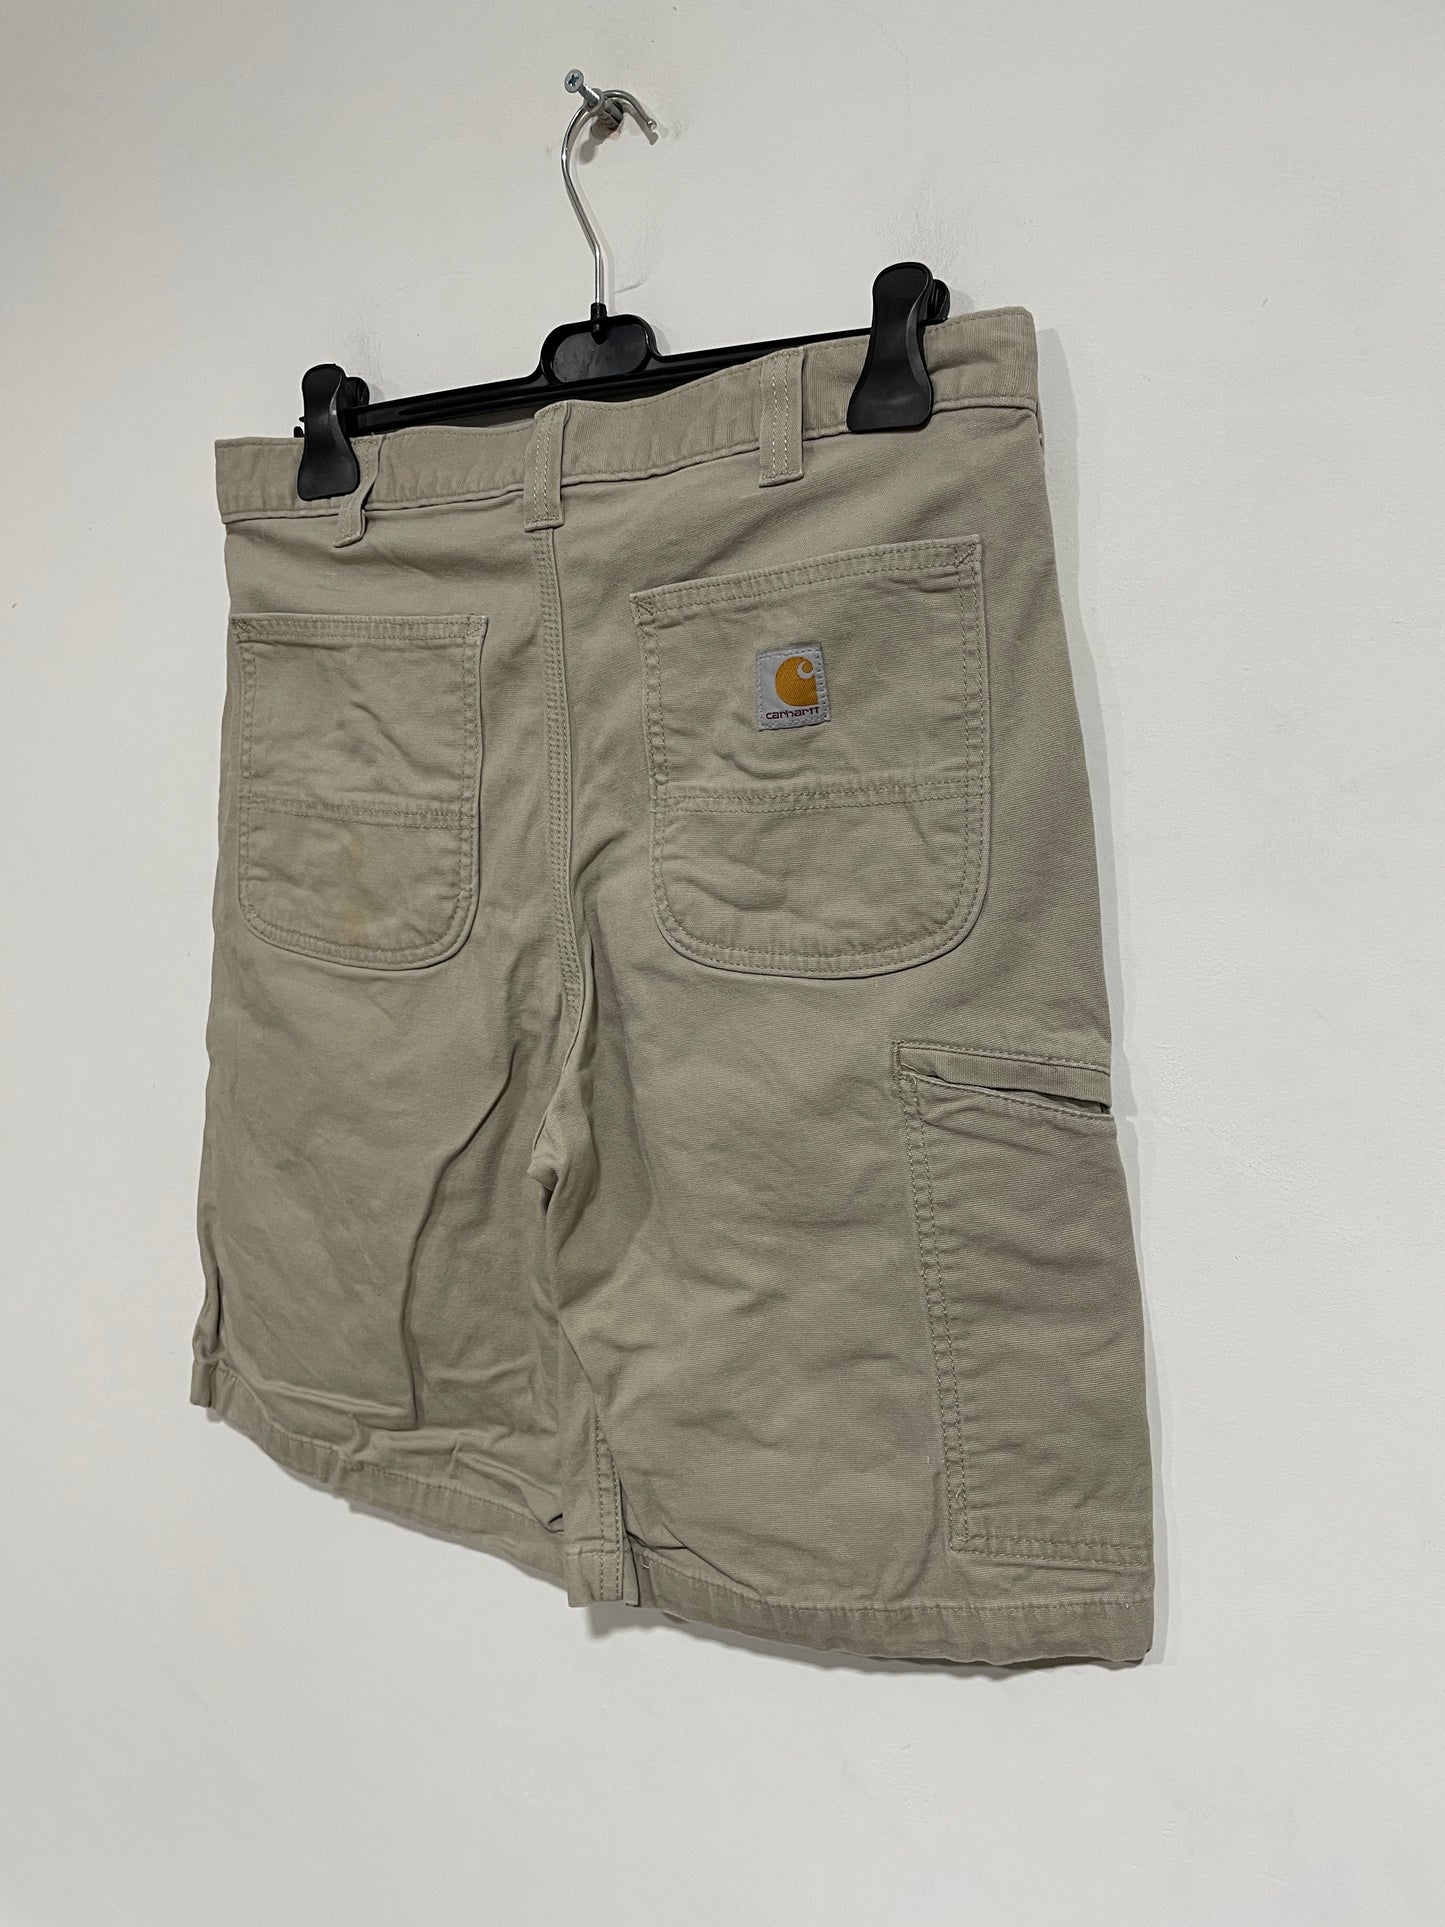 Shorts Carhartt workwear (MR321)